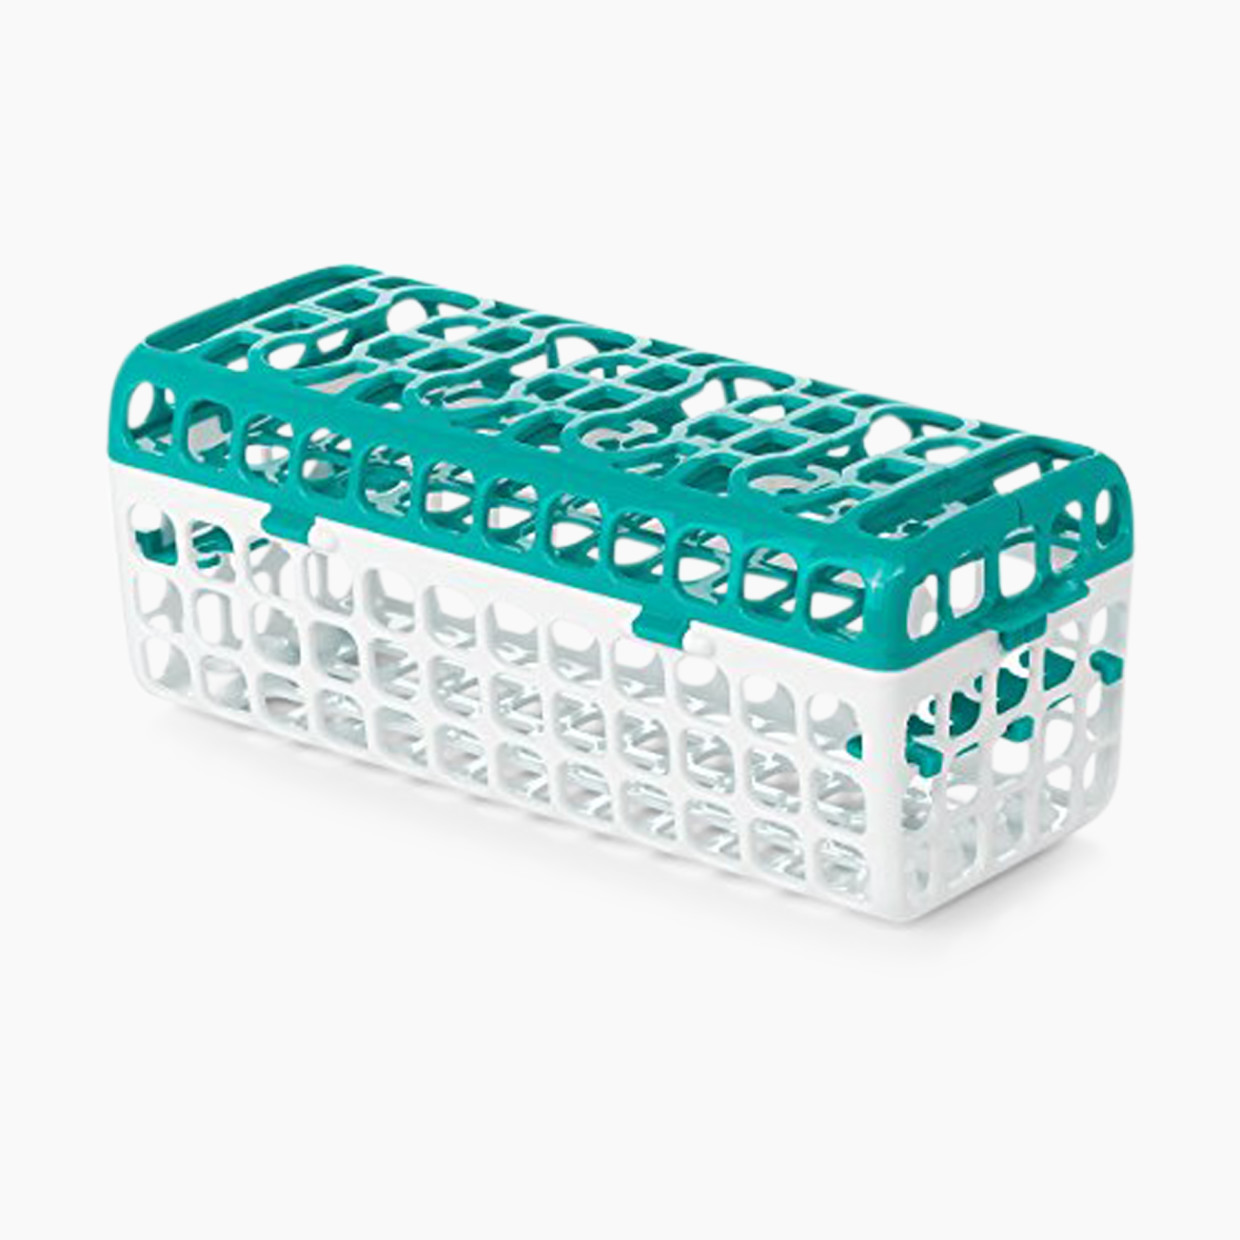 OXO Tot Dishwasher Basket - Teal.